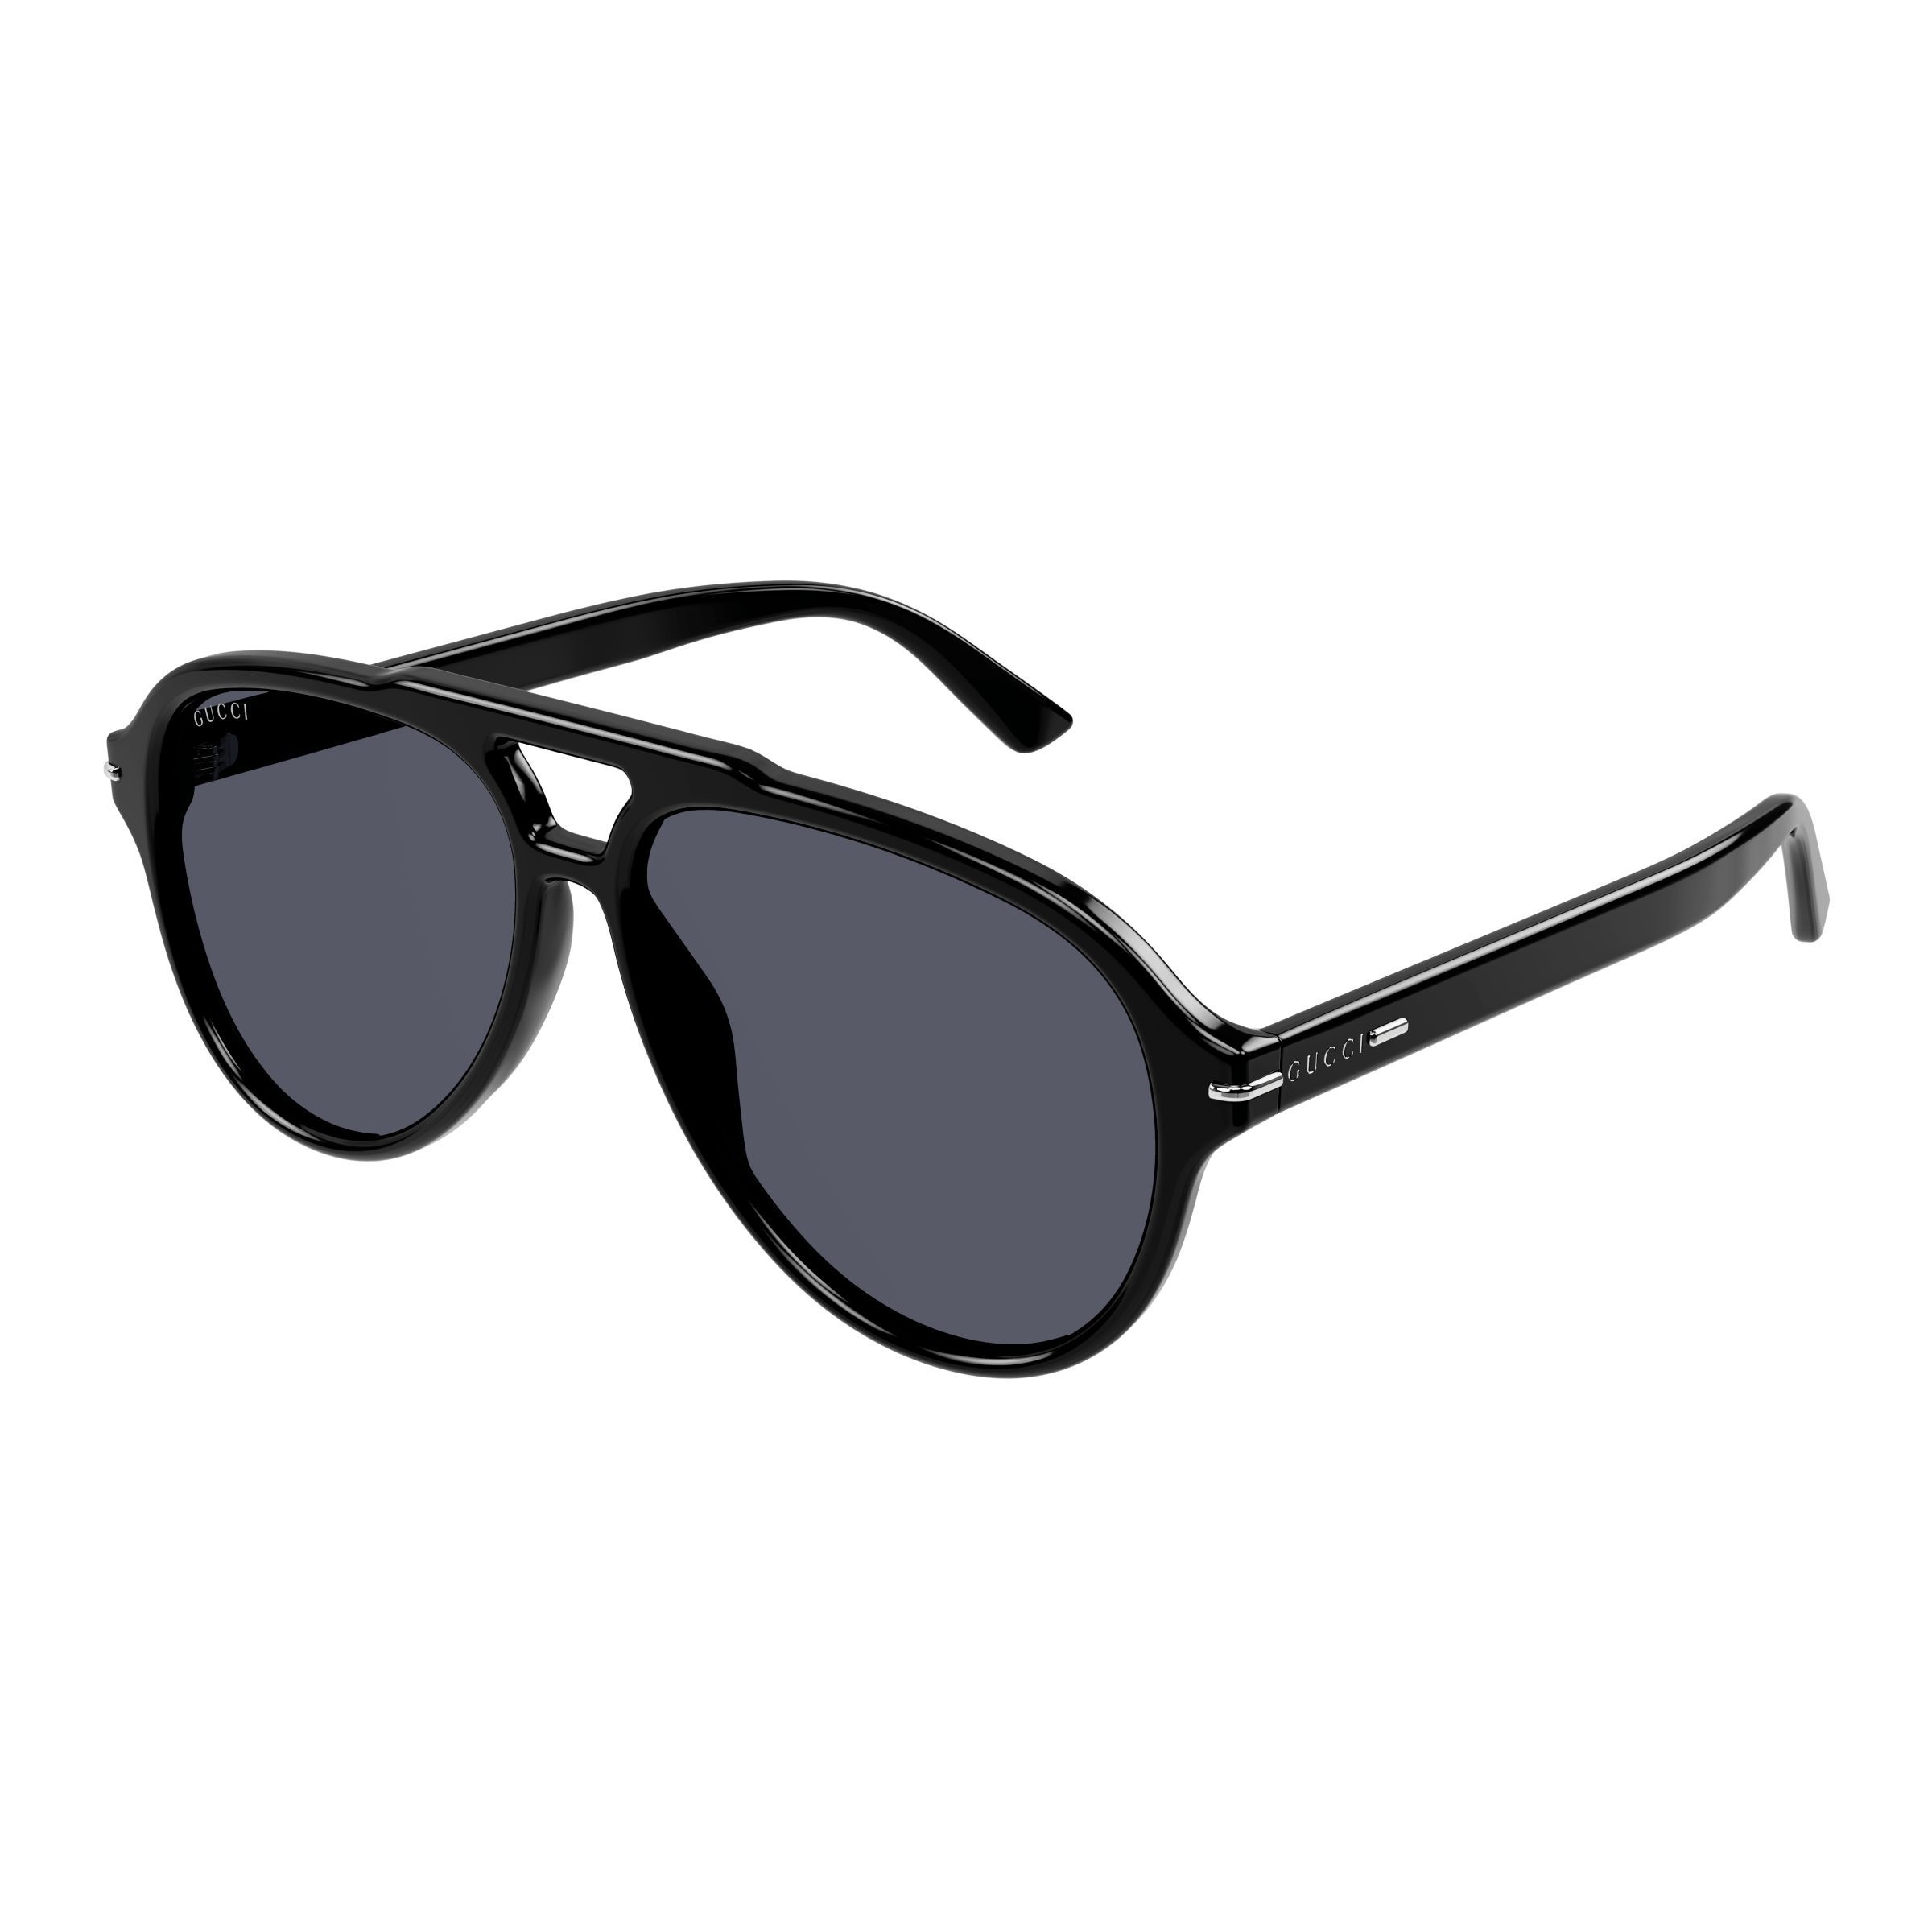 GG1443S Pilot Sunglasses  001 - size 58